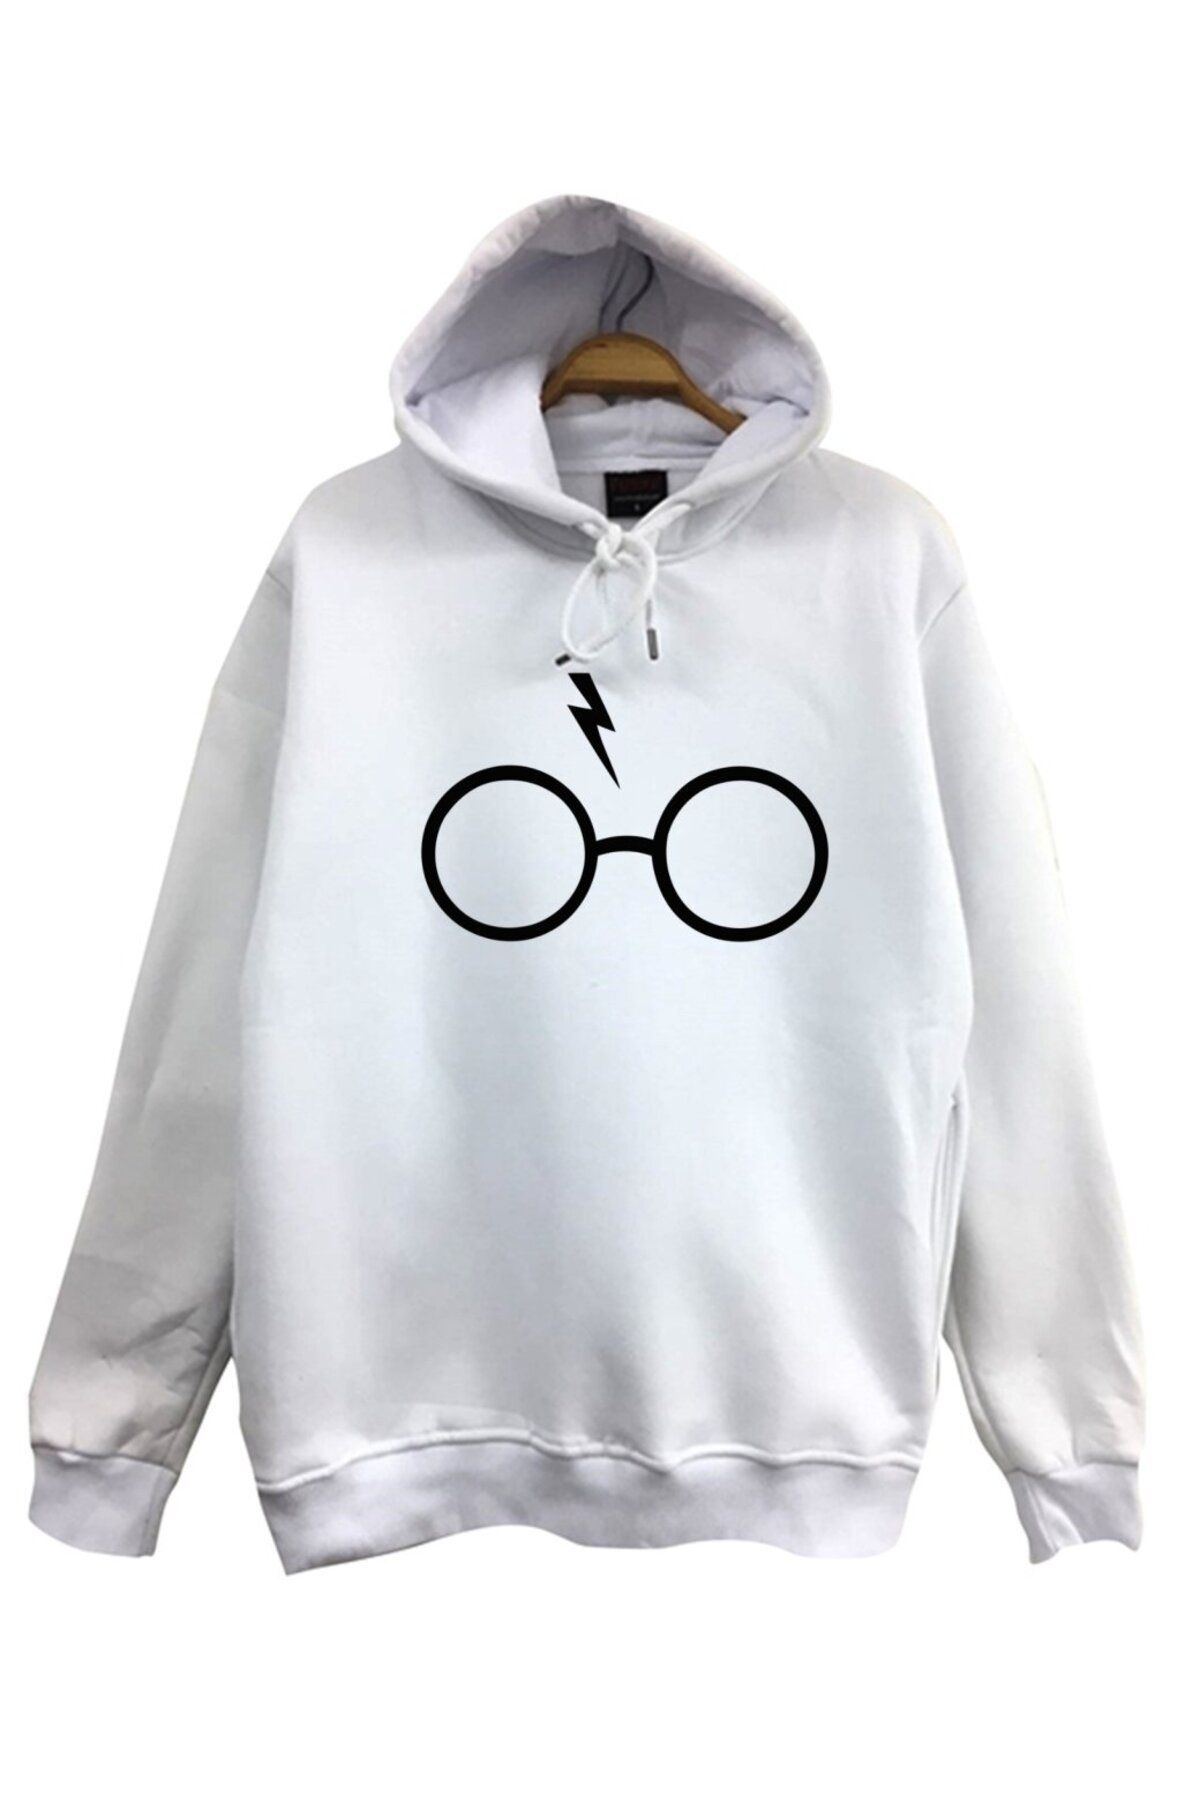 fame-stoned Çocuk Sweatshirt Harry Potter Baskılı